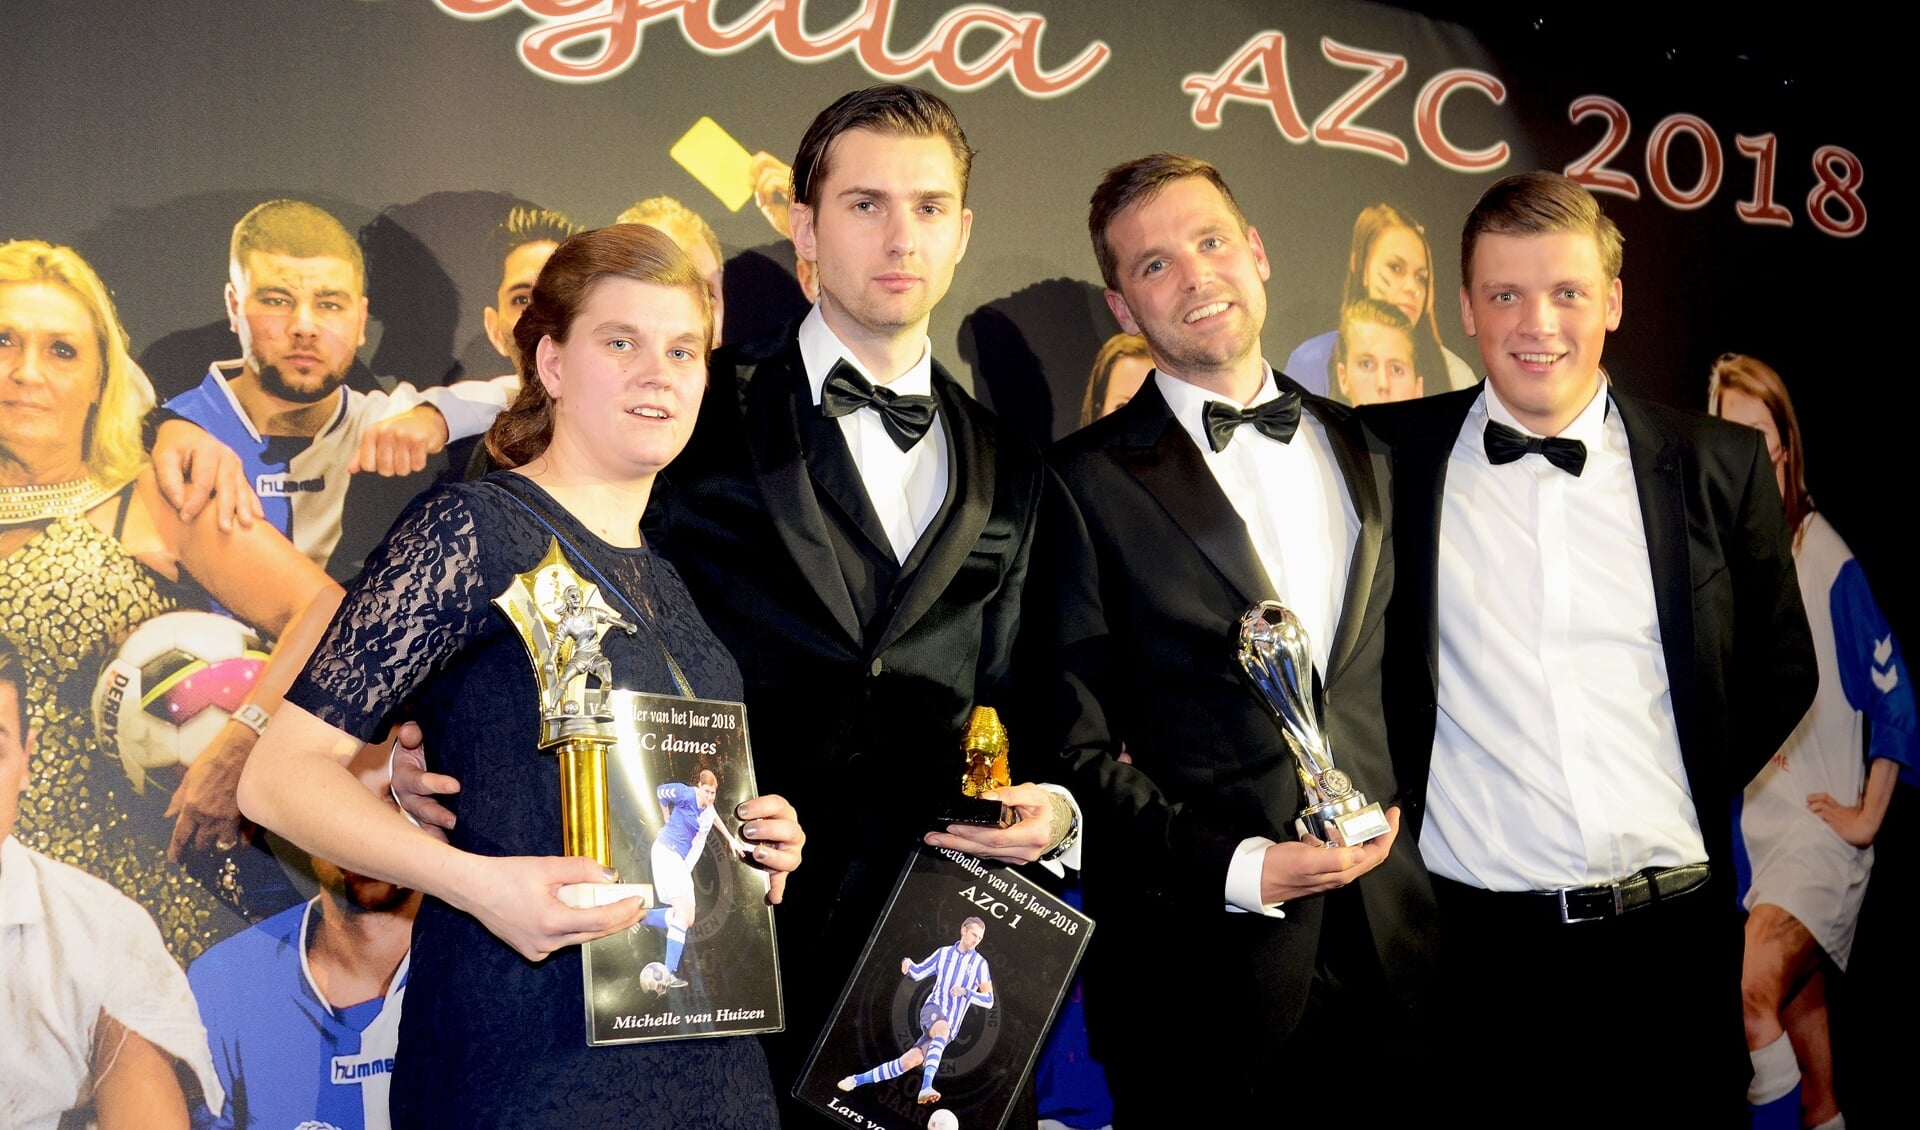 AZC Voetballers en talent van het jaar (v.l.n.r.): Michelle van Huizen, Lars van Roon, Jorg Heemskerk en Luc Wassink. Foto: Freddy Burgers